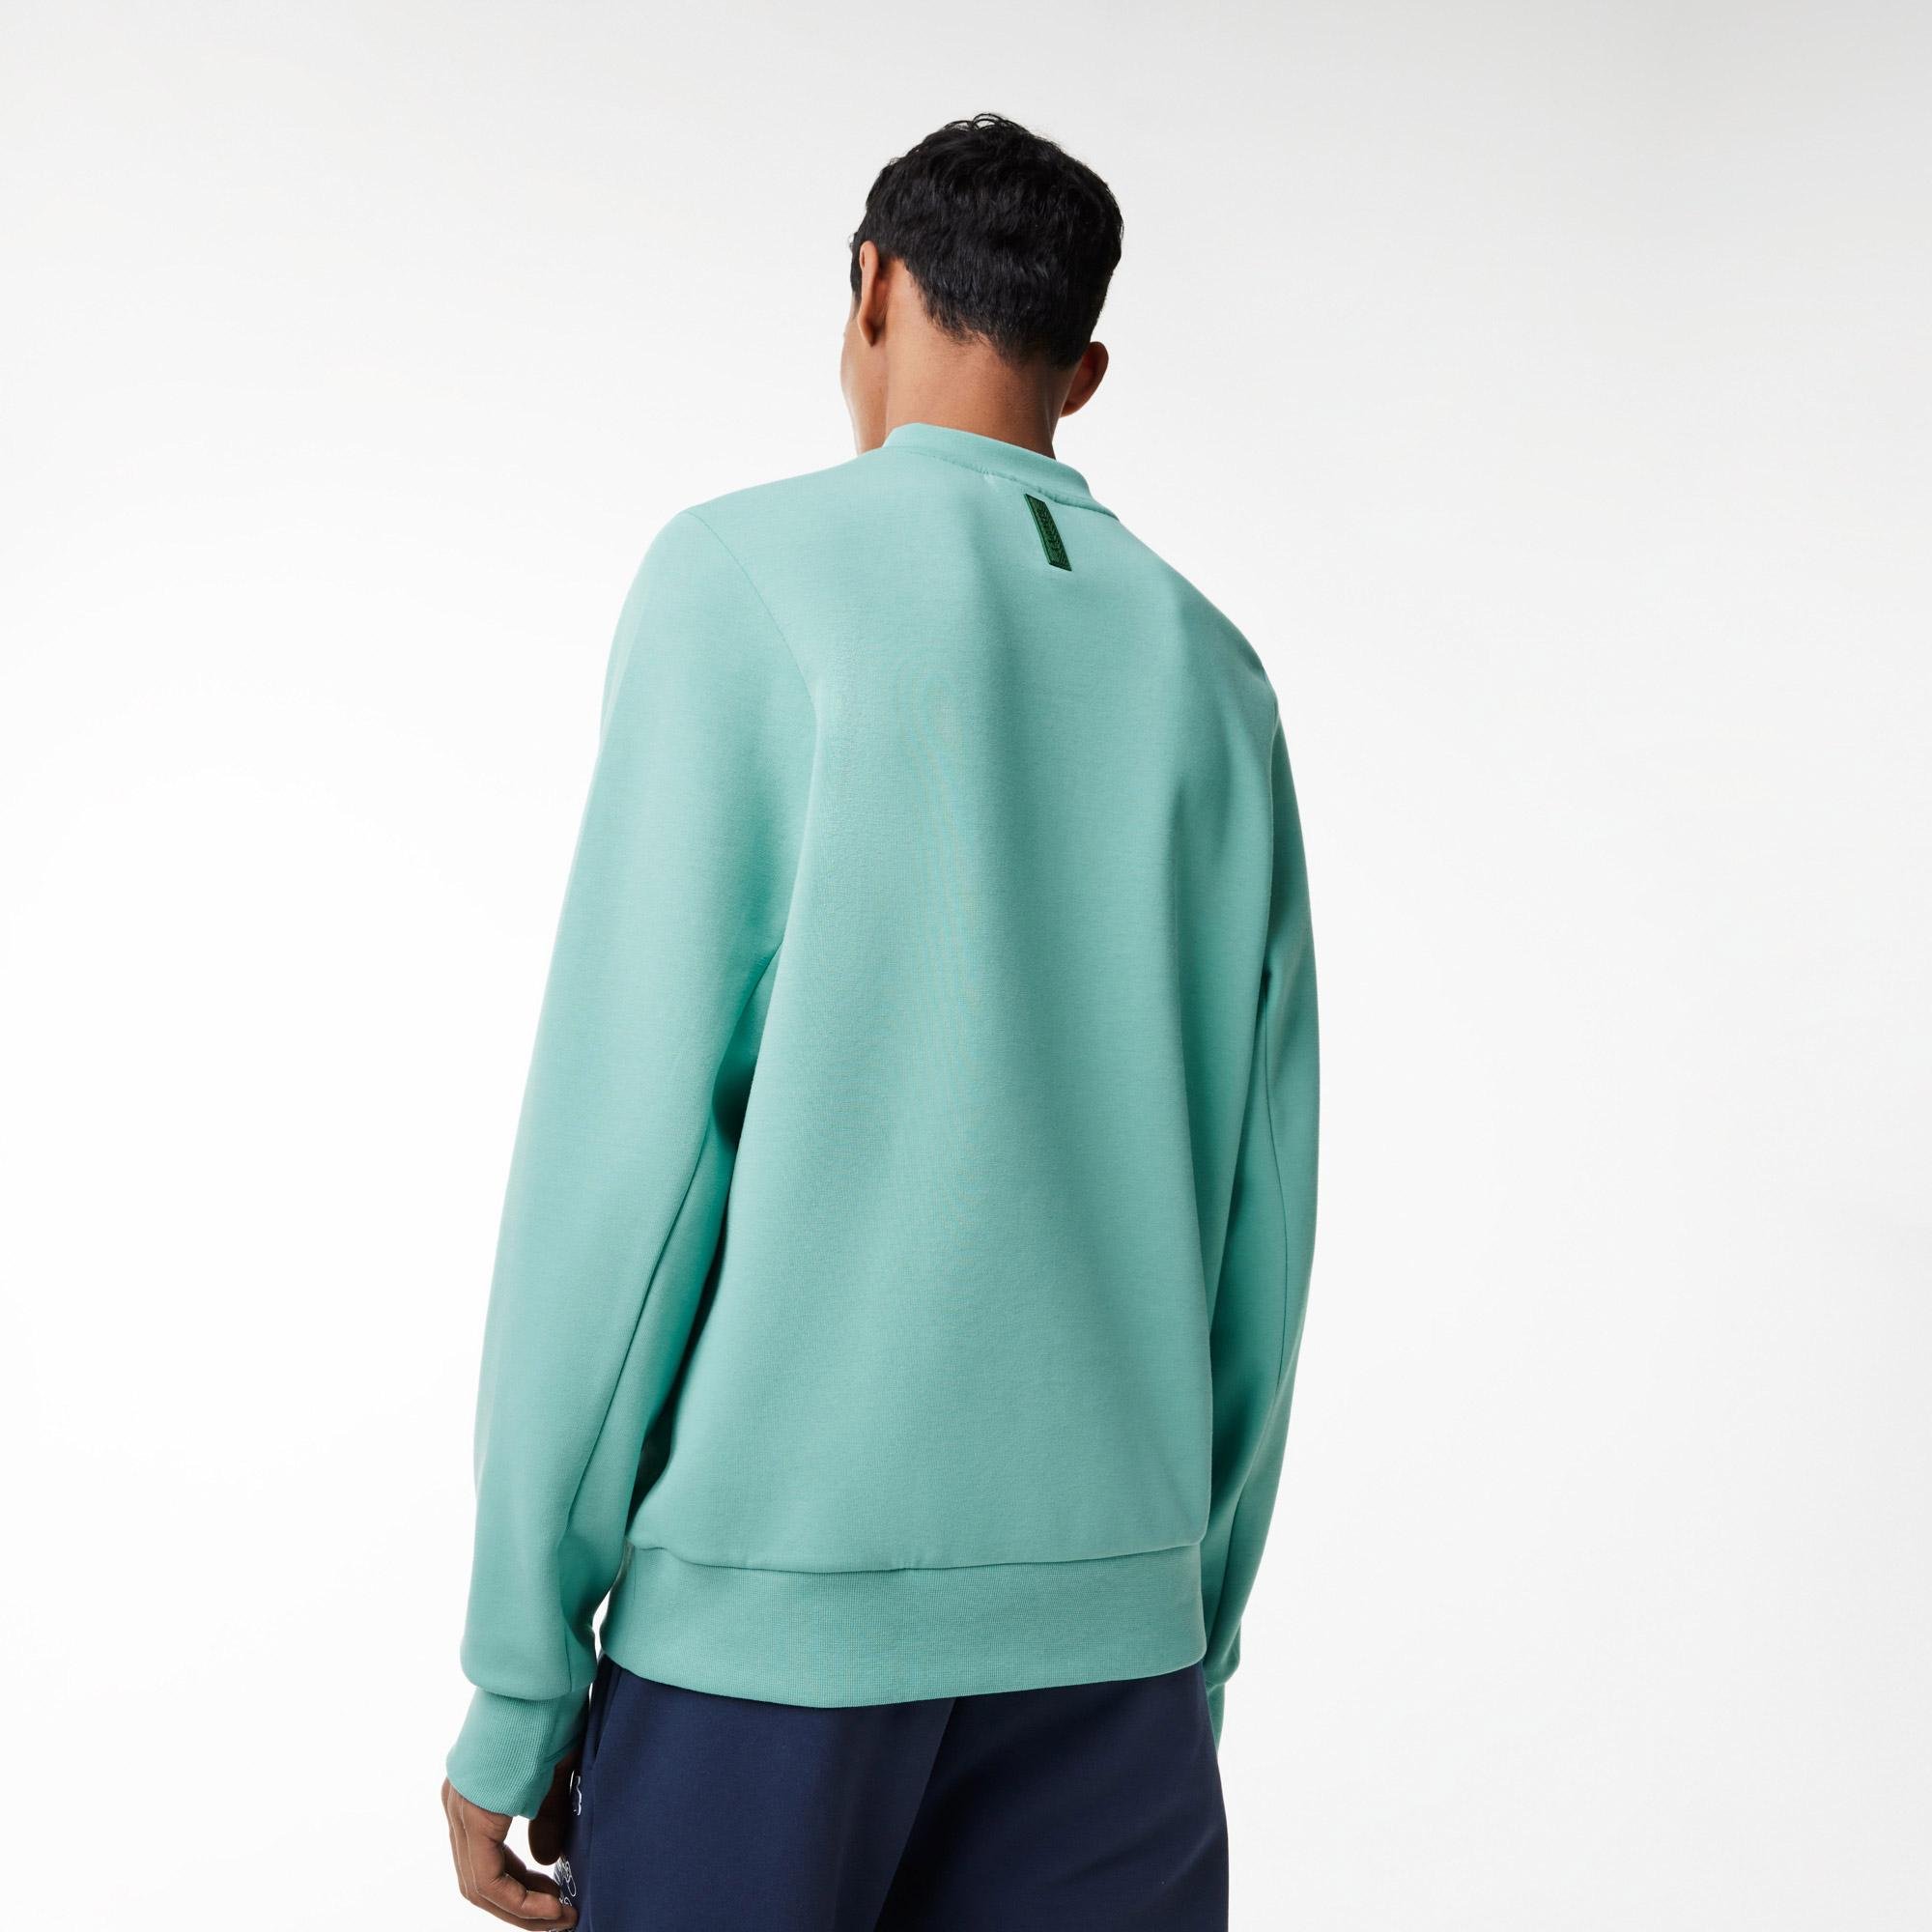 Lacoste Men’s Crew Neck Kangaroo Pocket Cotton Blend Sweatshirt